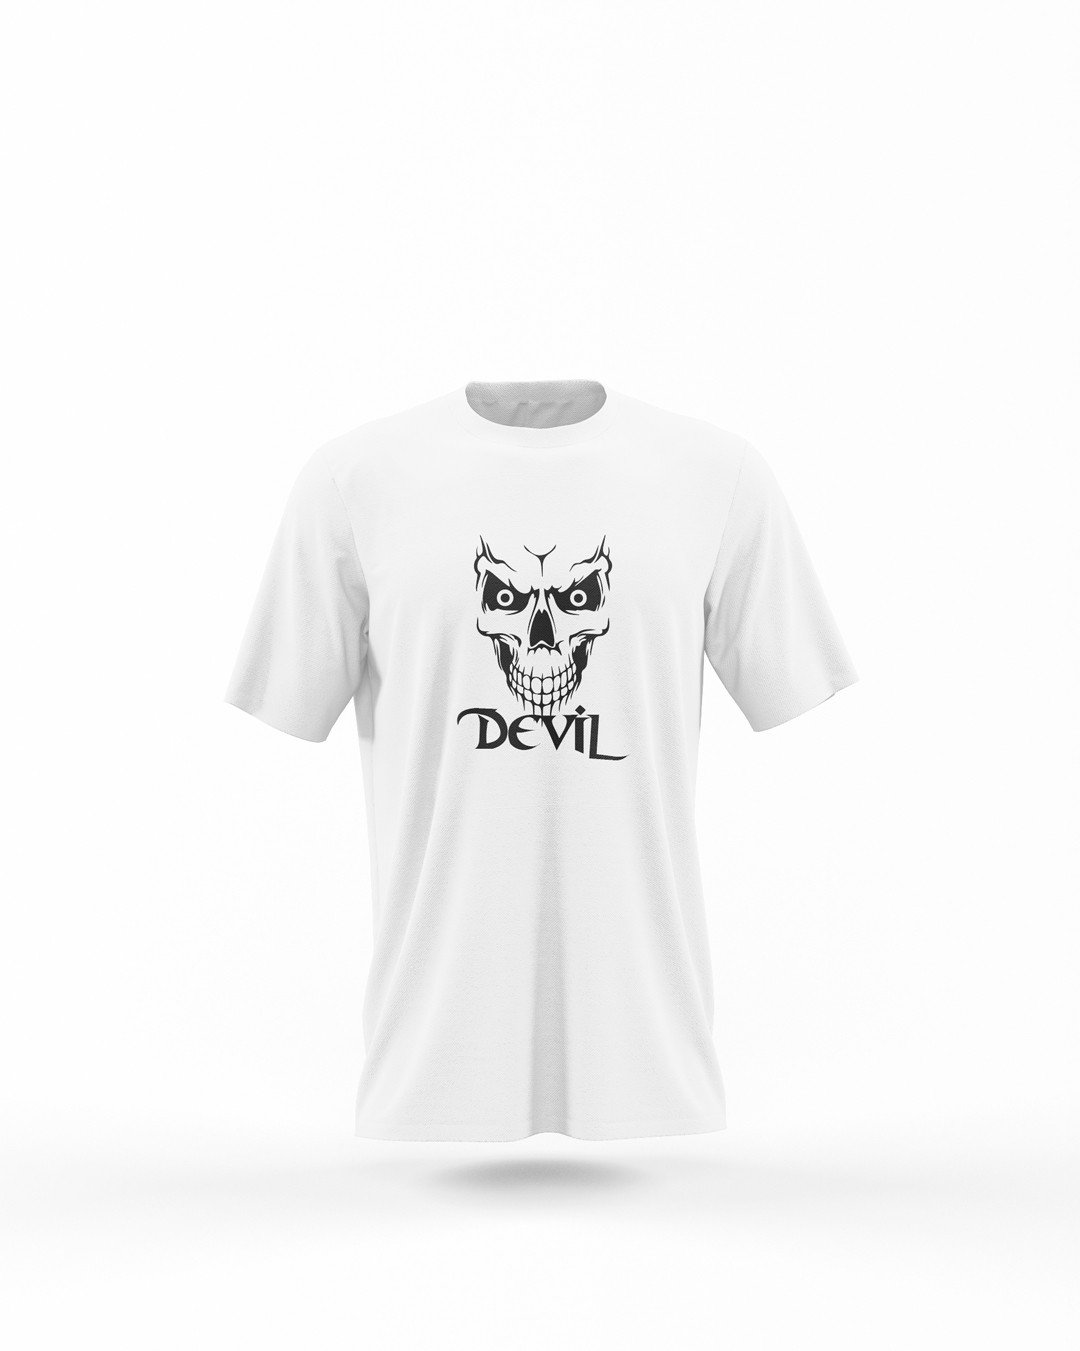 Devil face Printed Cotton White T-Shirt